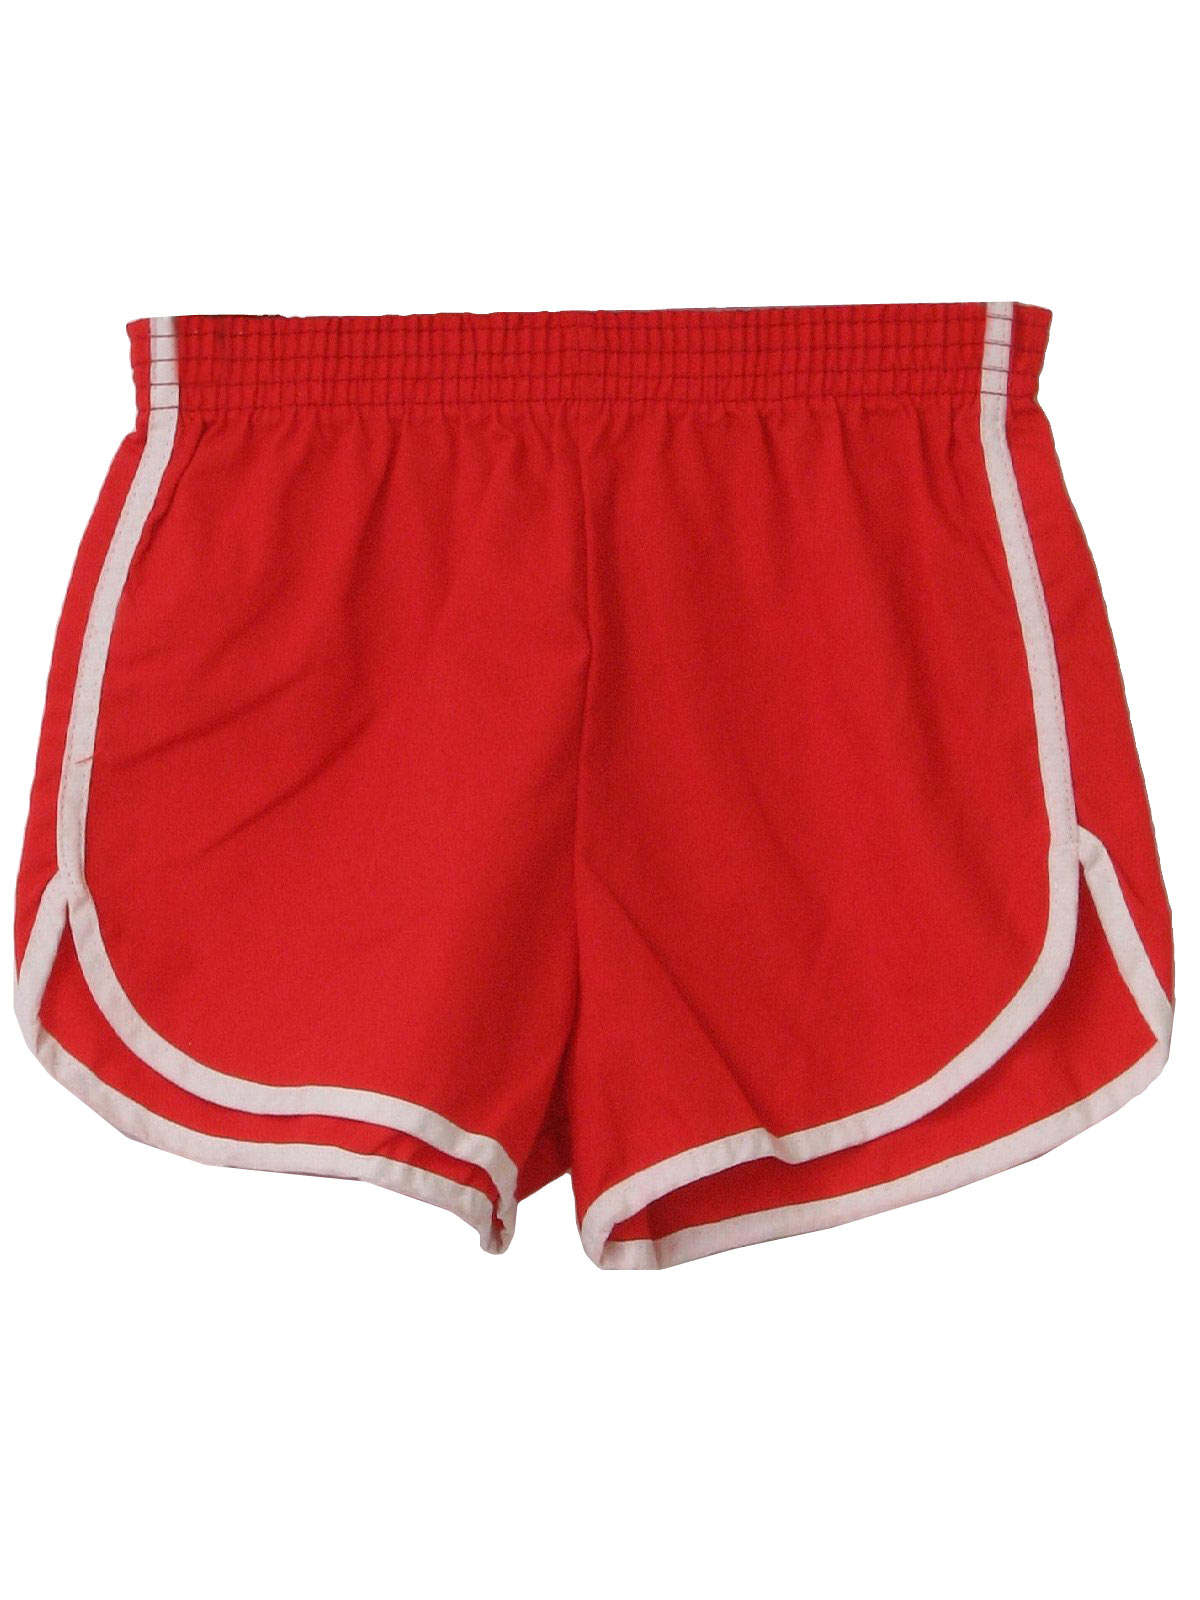 Retro 1980's Shorts (Size Label) : 80s -Size Label- Mens